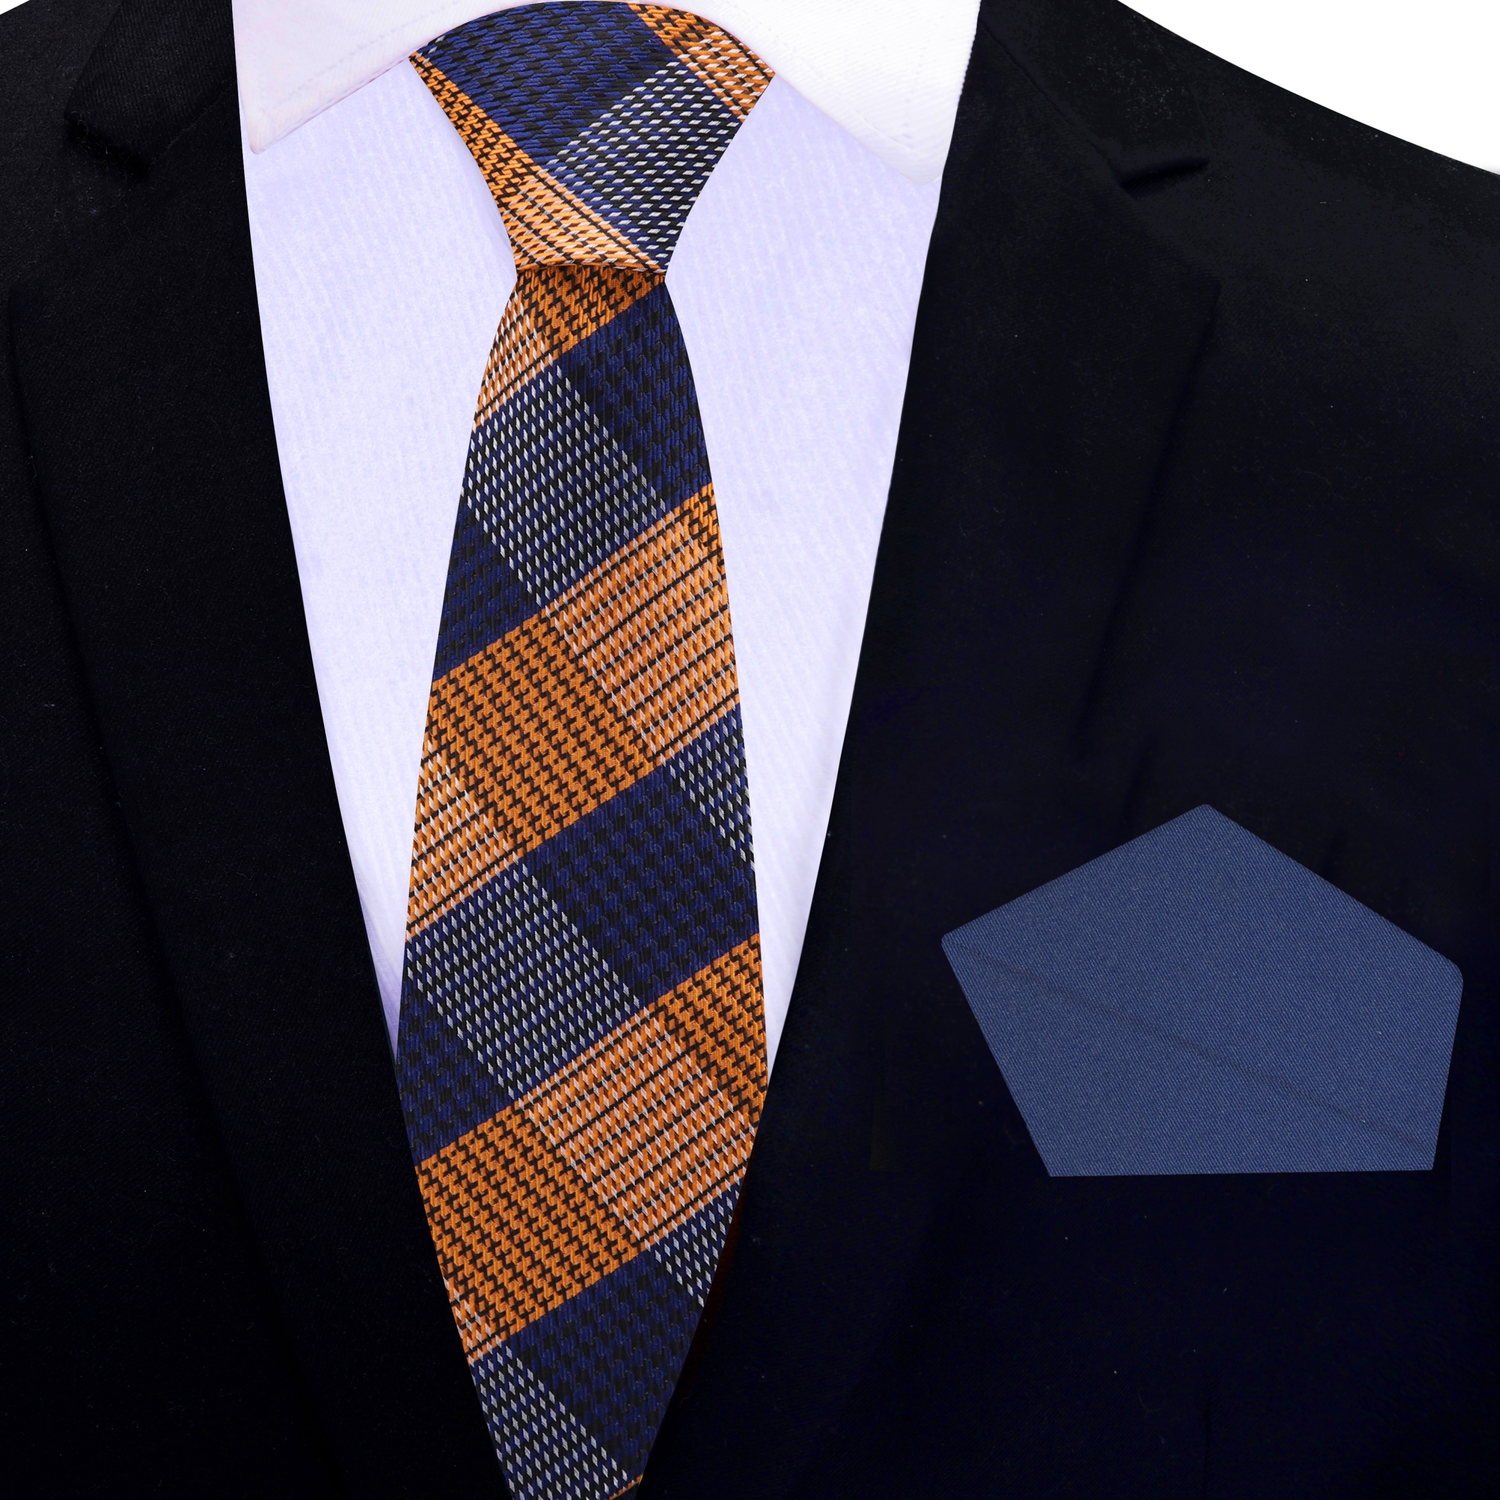 Thin Tie: Orange, Black, Blue Plaid Silk Necktie with Accenting Blue Square